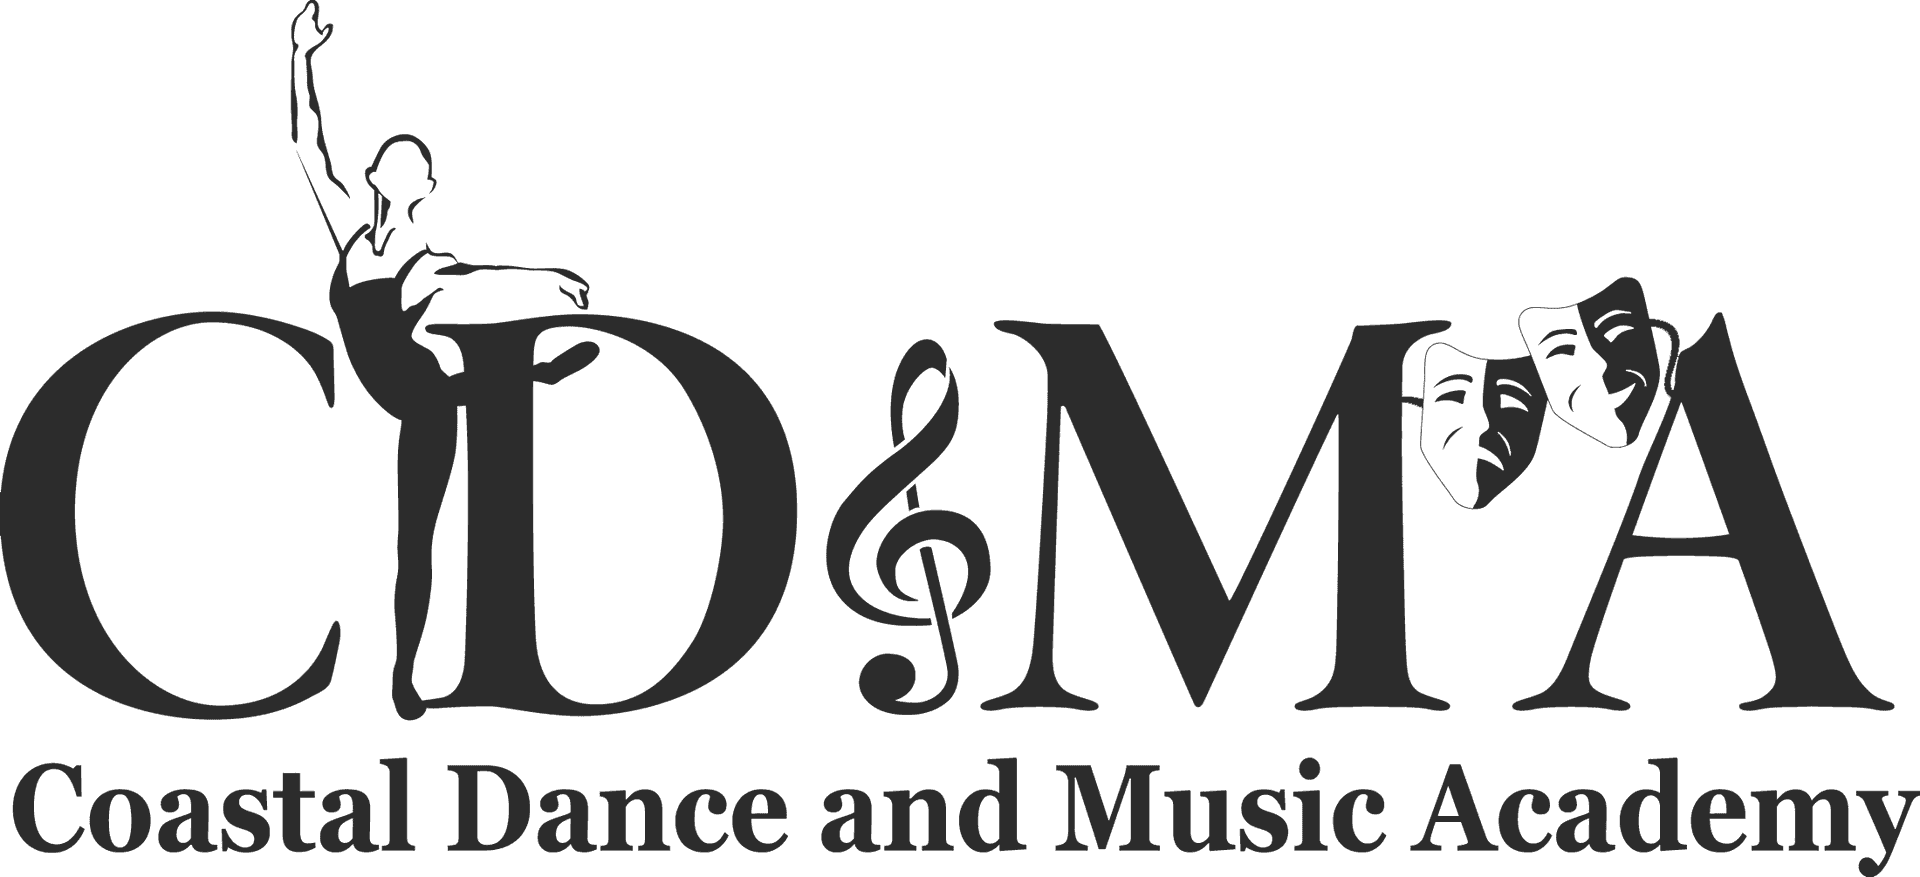 Coastal Dance Music Academy Logo PNG image